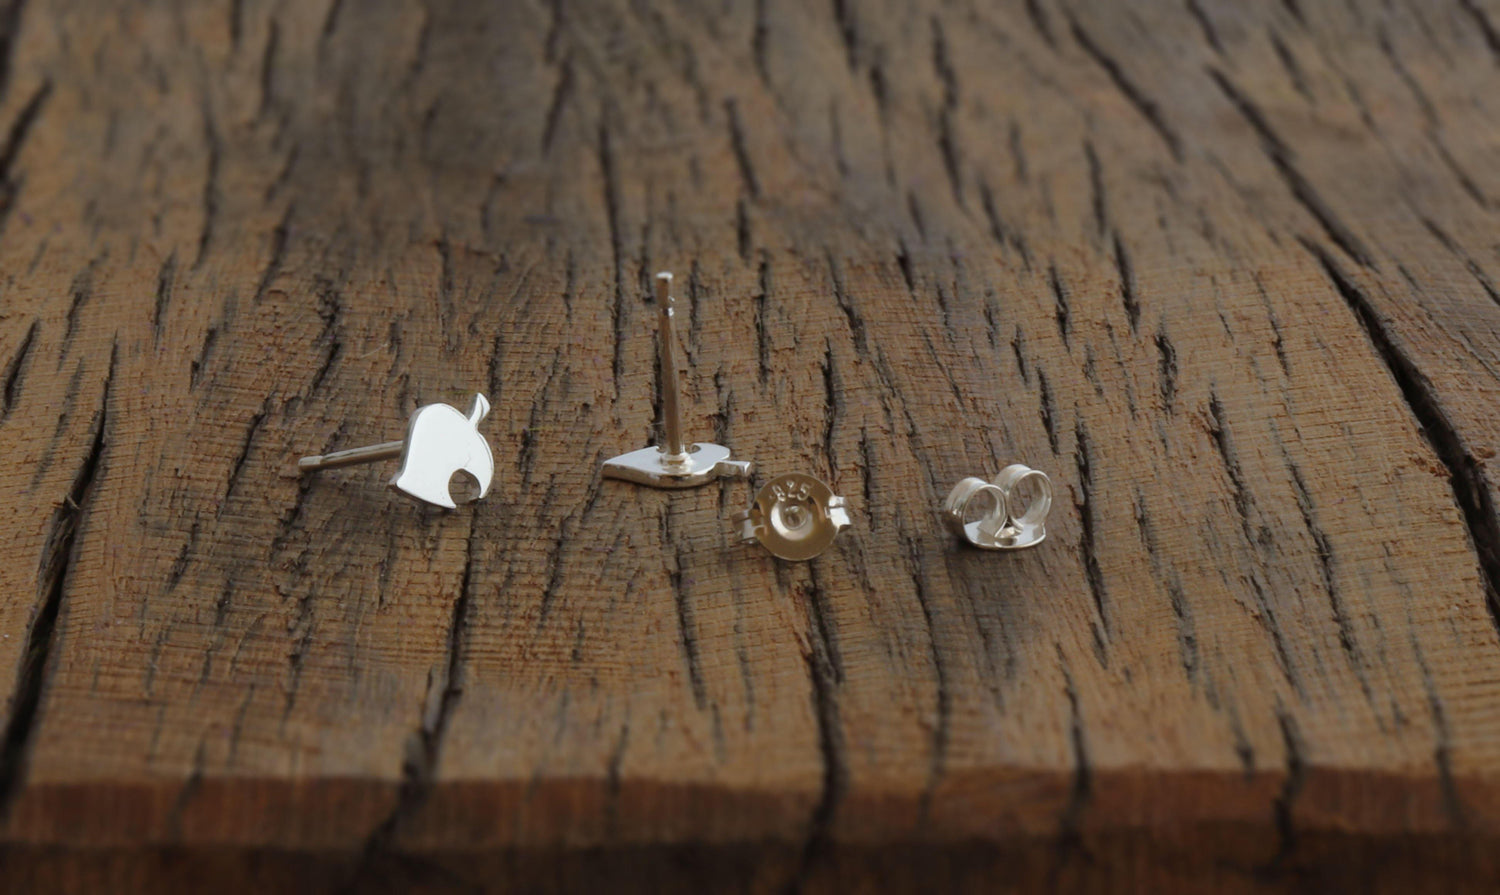 Animal Crossing Leaf Studs in Sterling Silver - Sweet November Jewelry